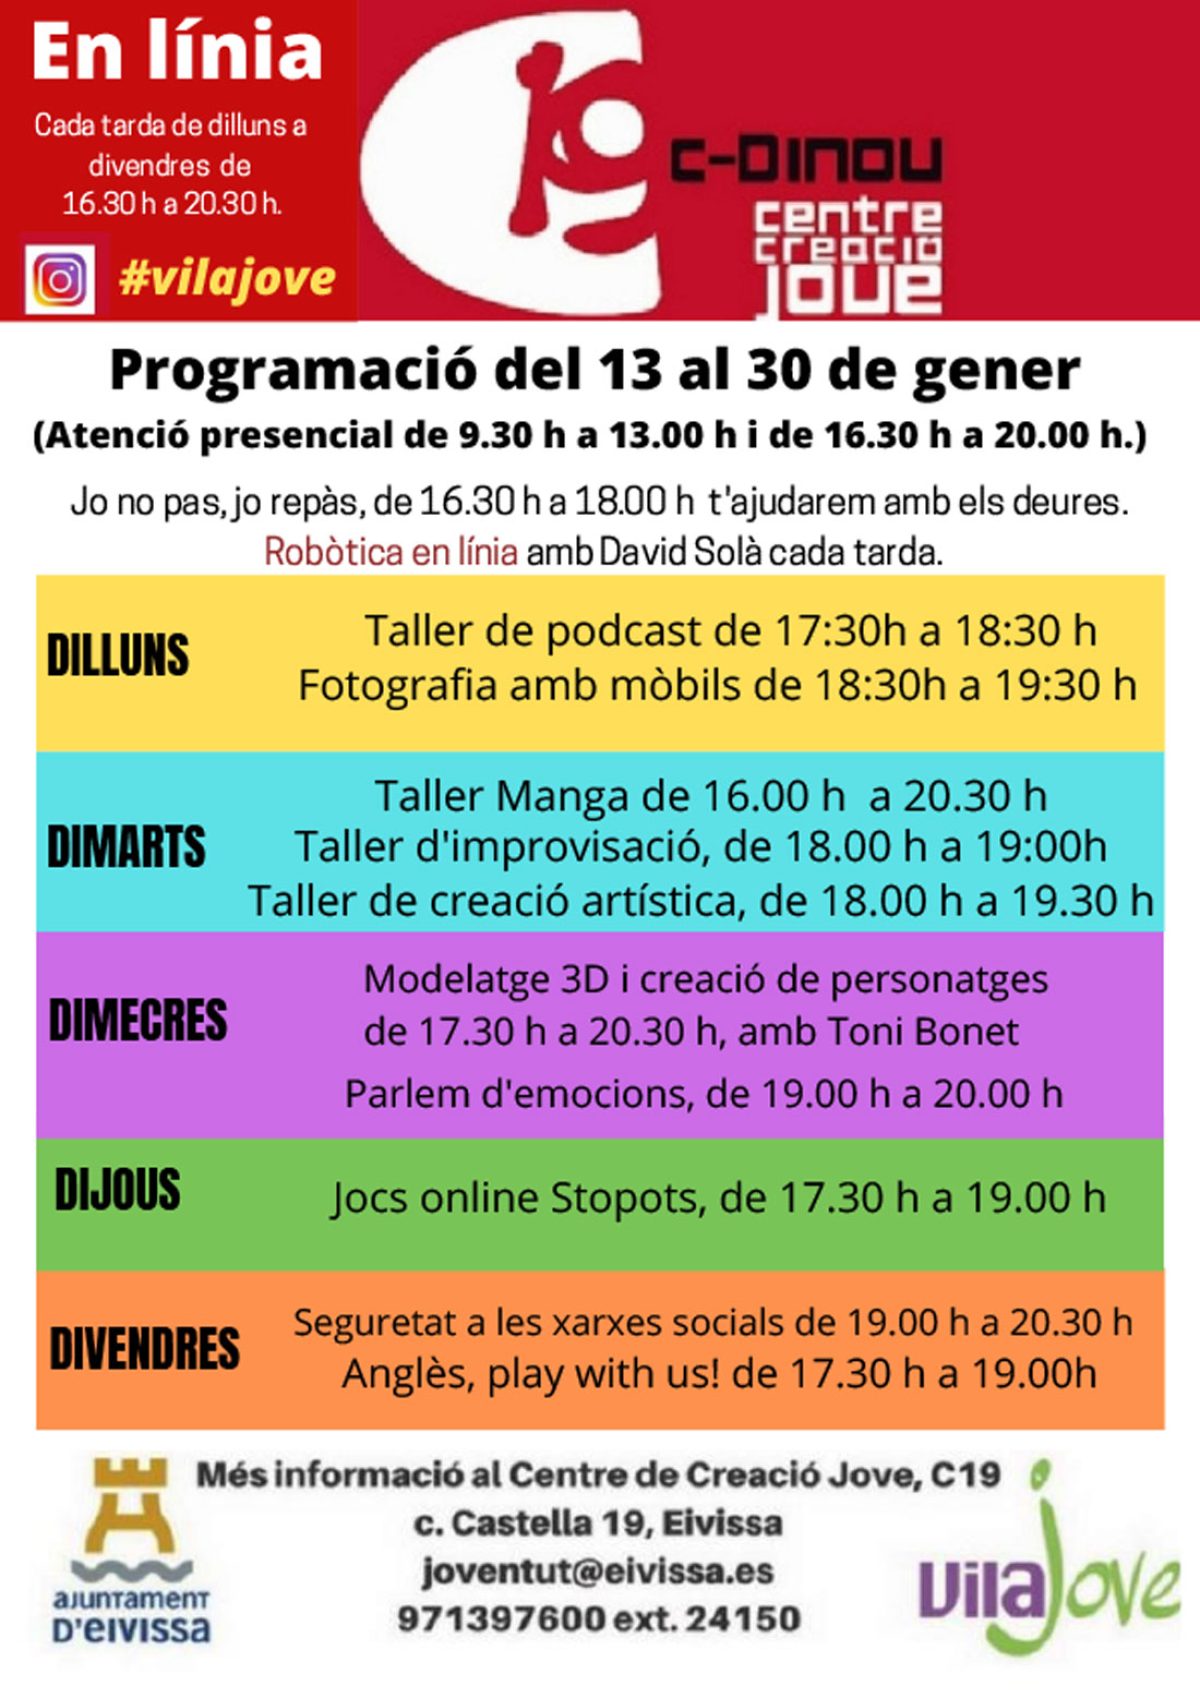 programacion-c19-centro-juvenil-ibiza-enero-2021-online-welcometoibiza